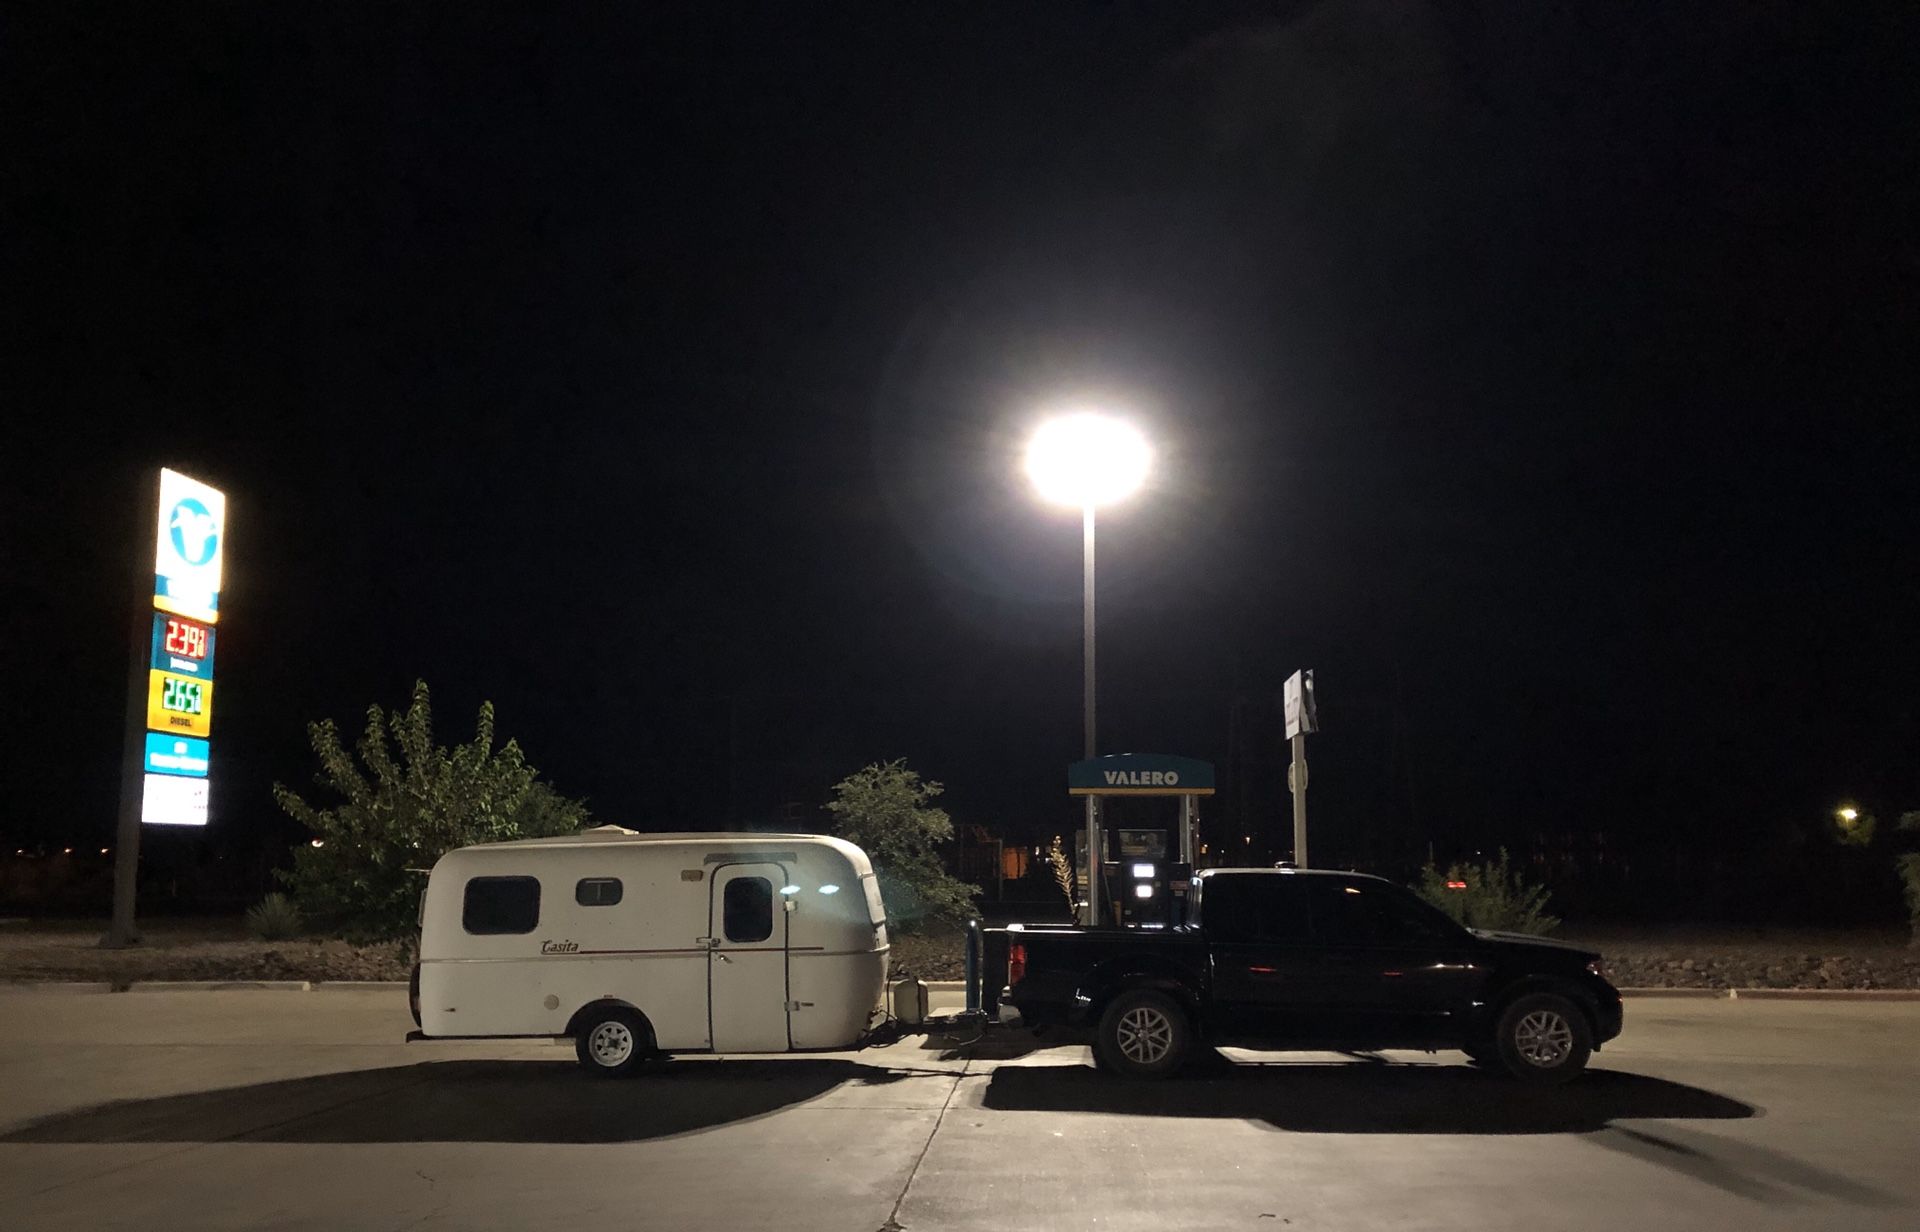 Casita travel trailer